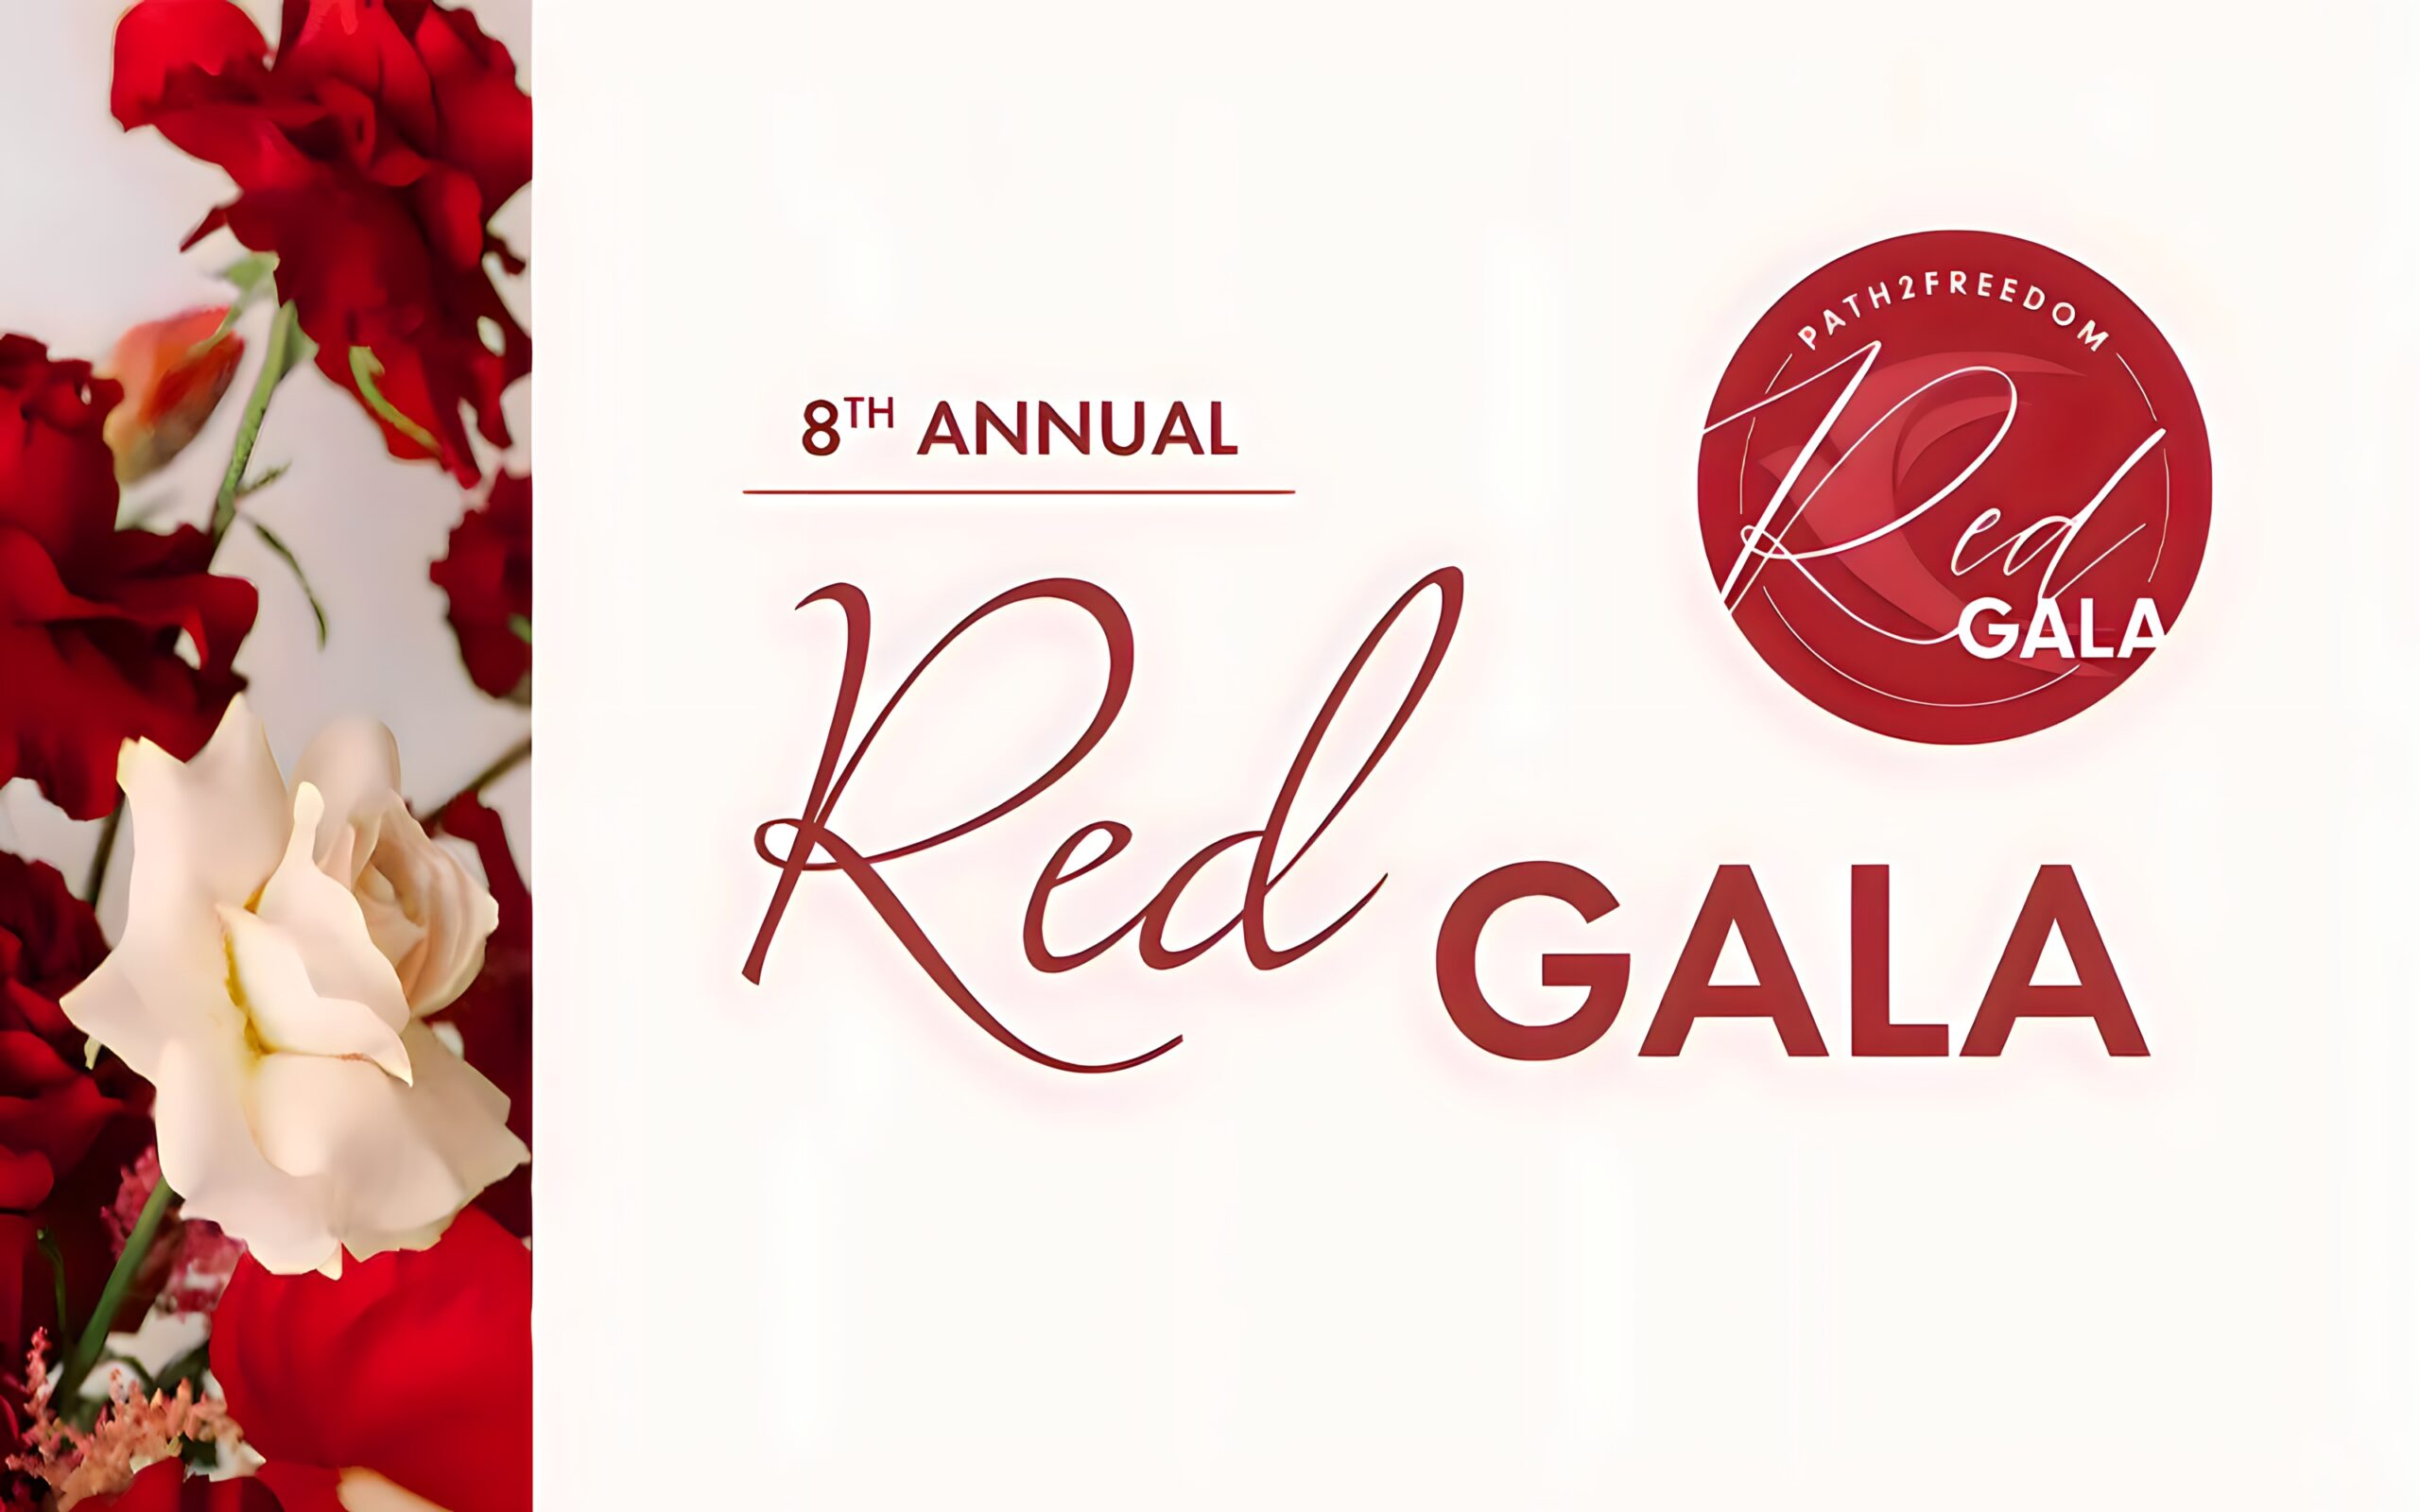 Path2Freedom 8th Annual Red Gala